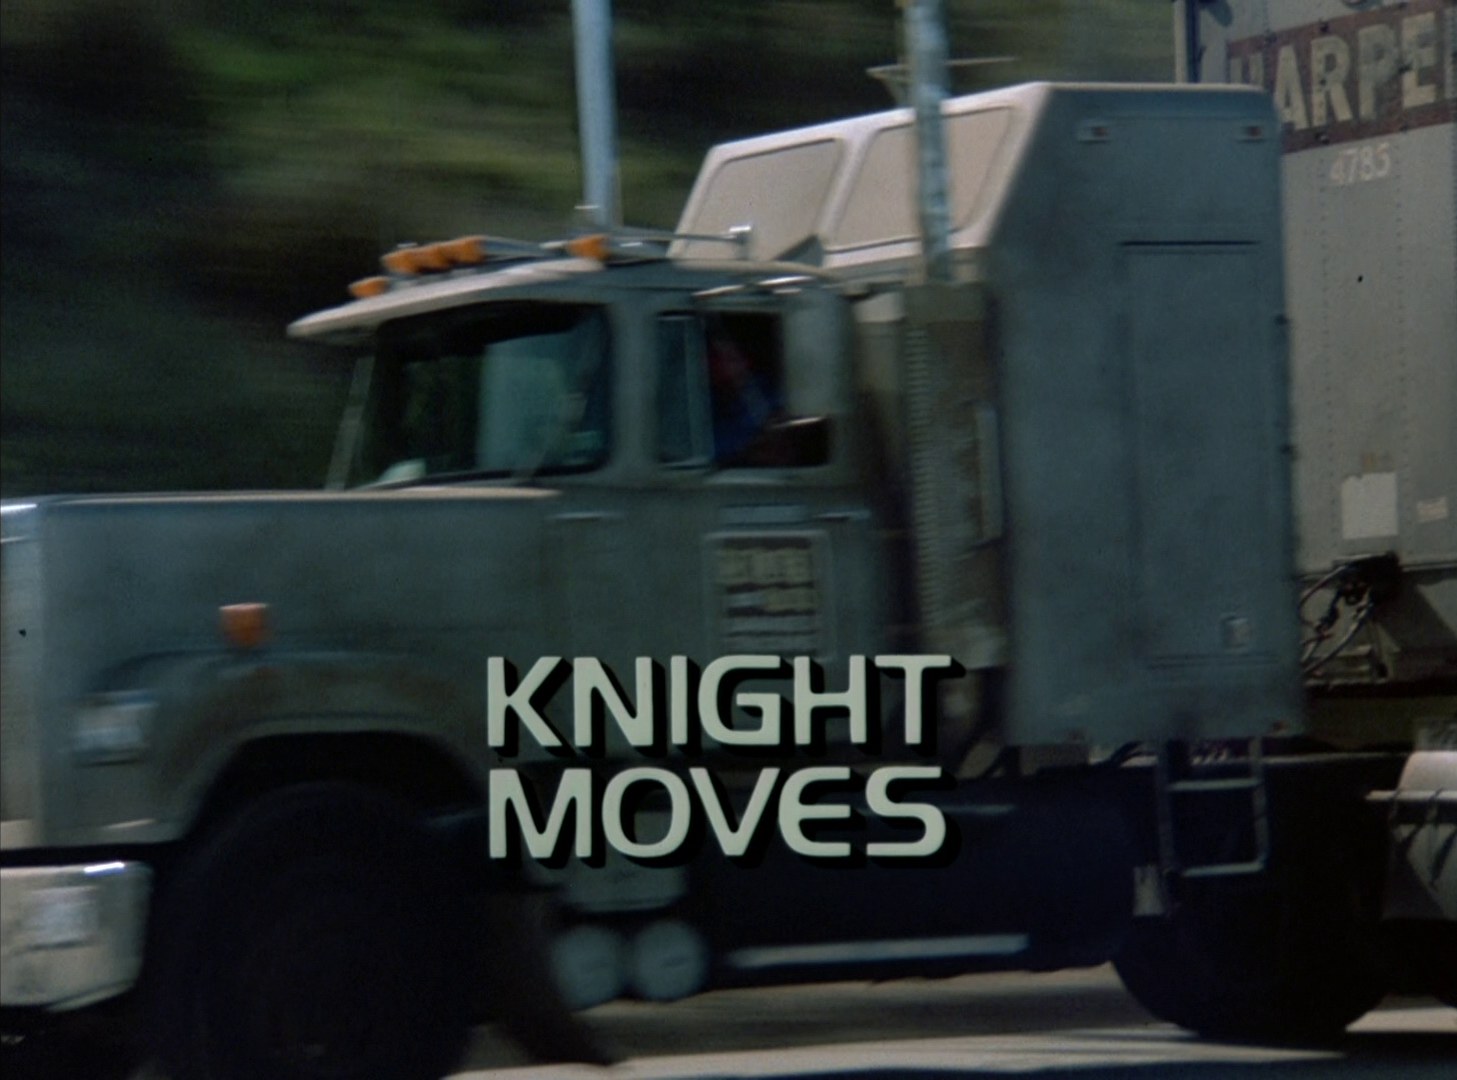 Knight Rider Season 1 - Episode 19 - Knight Moves - Photo 1